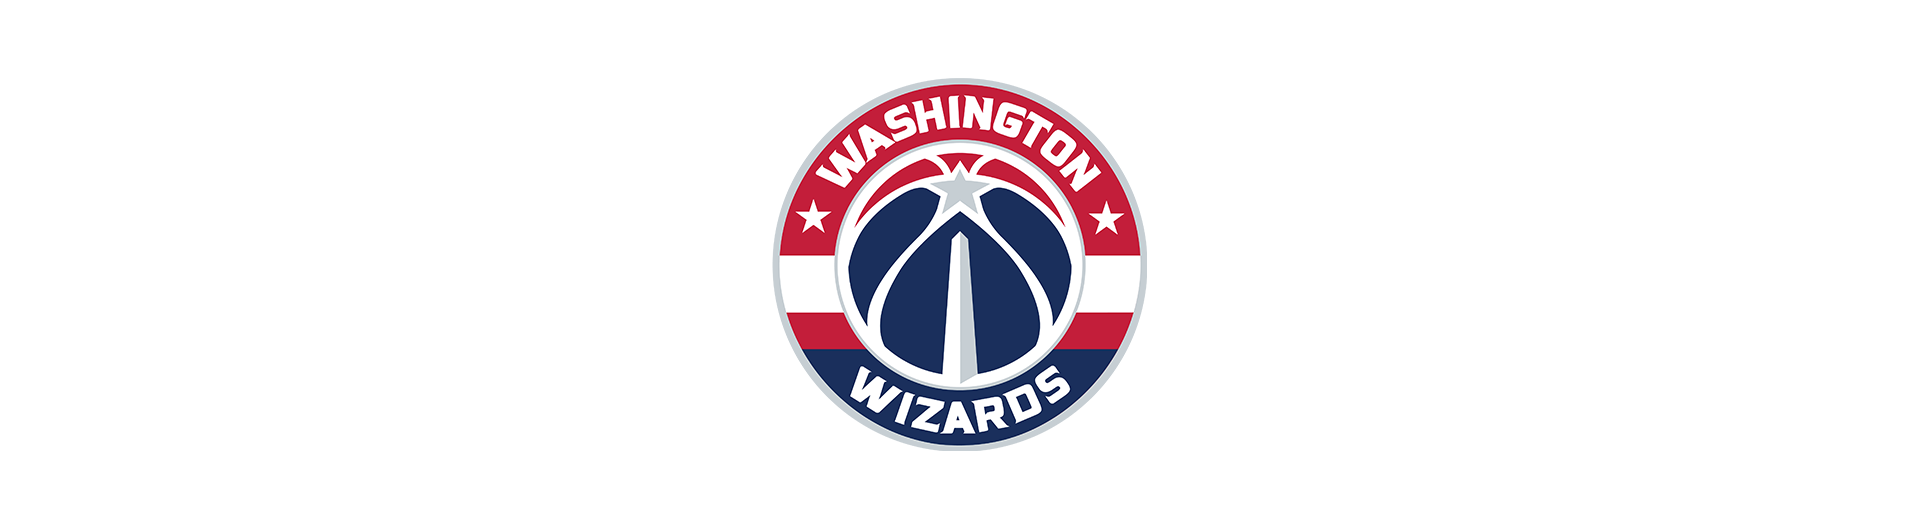 Washington Wizards (WAS)